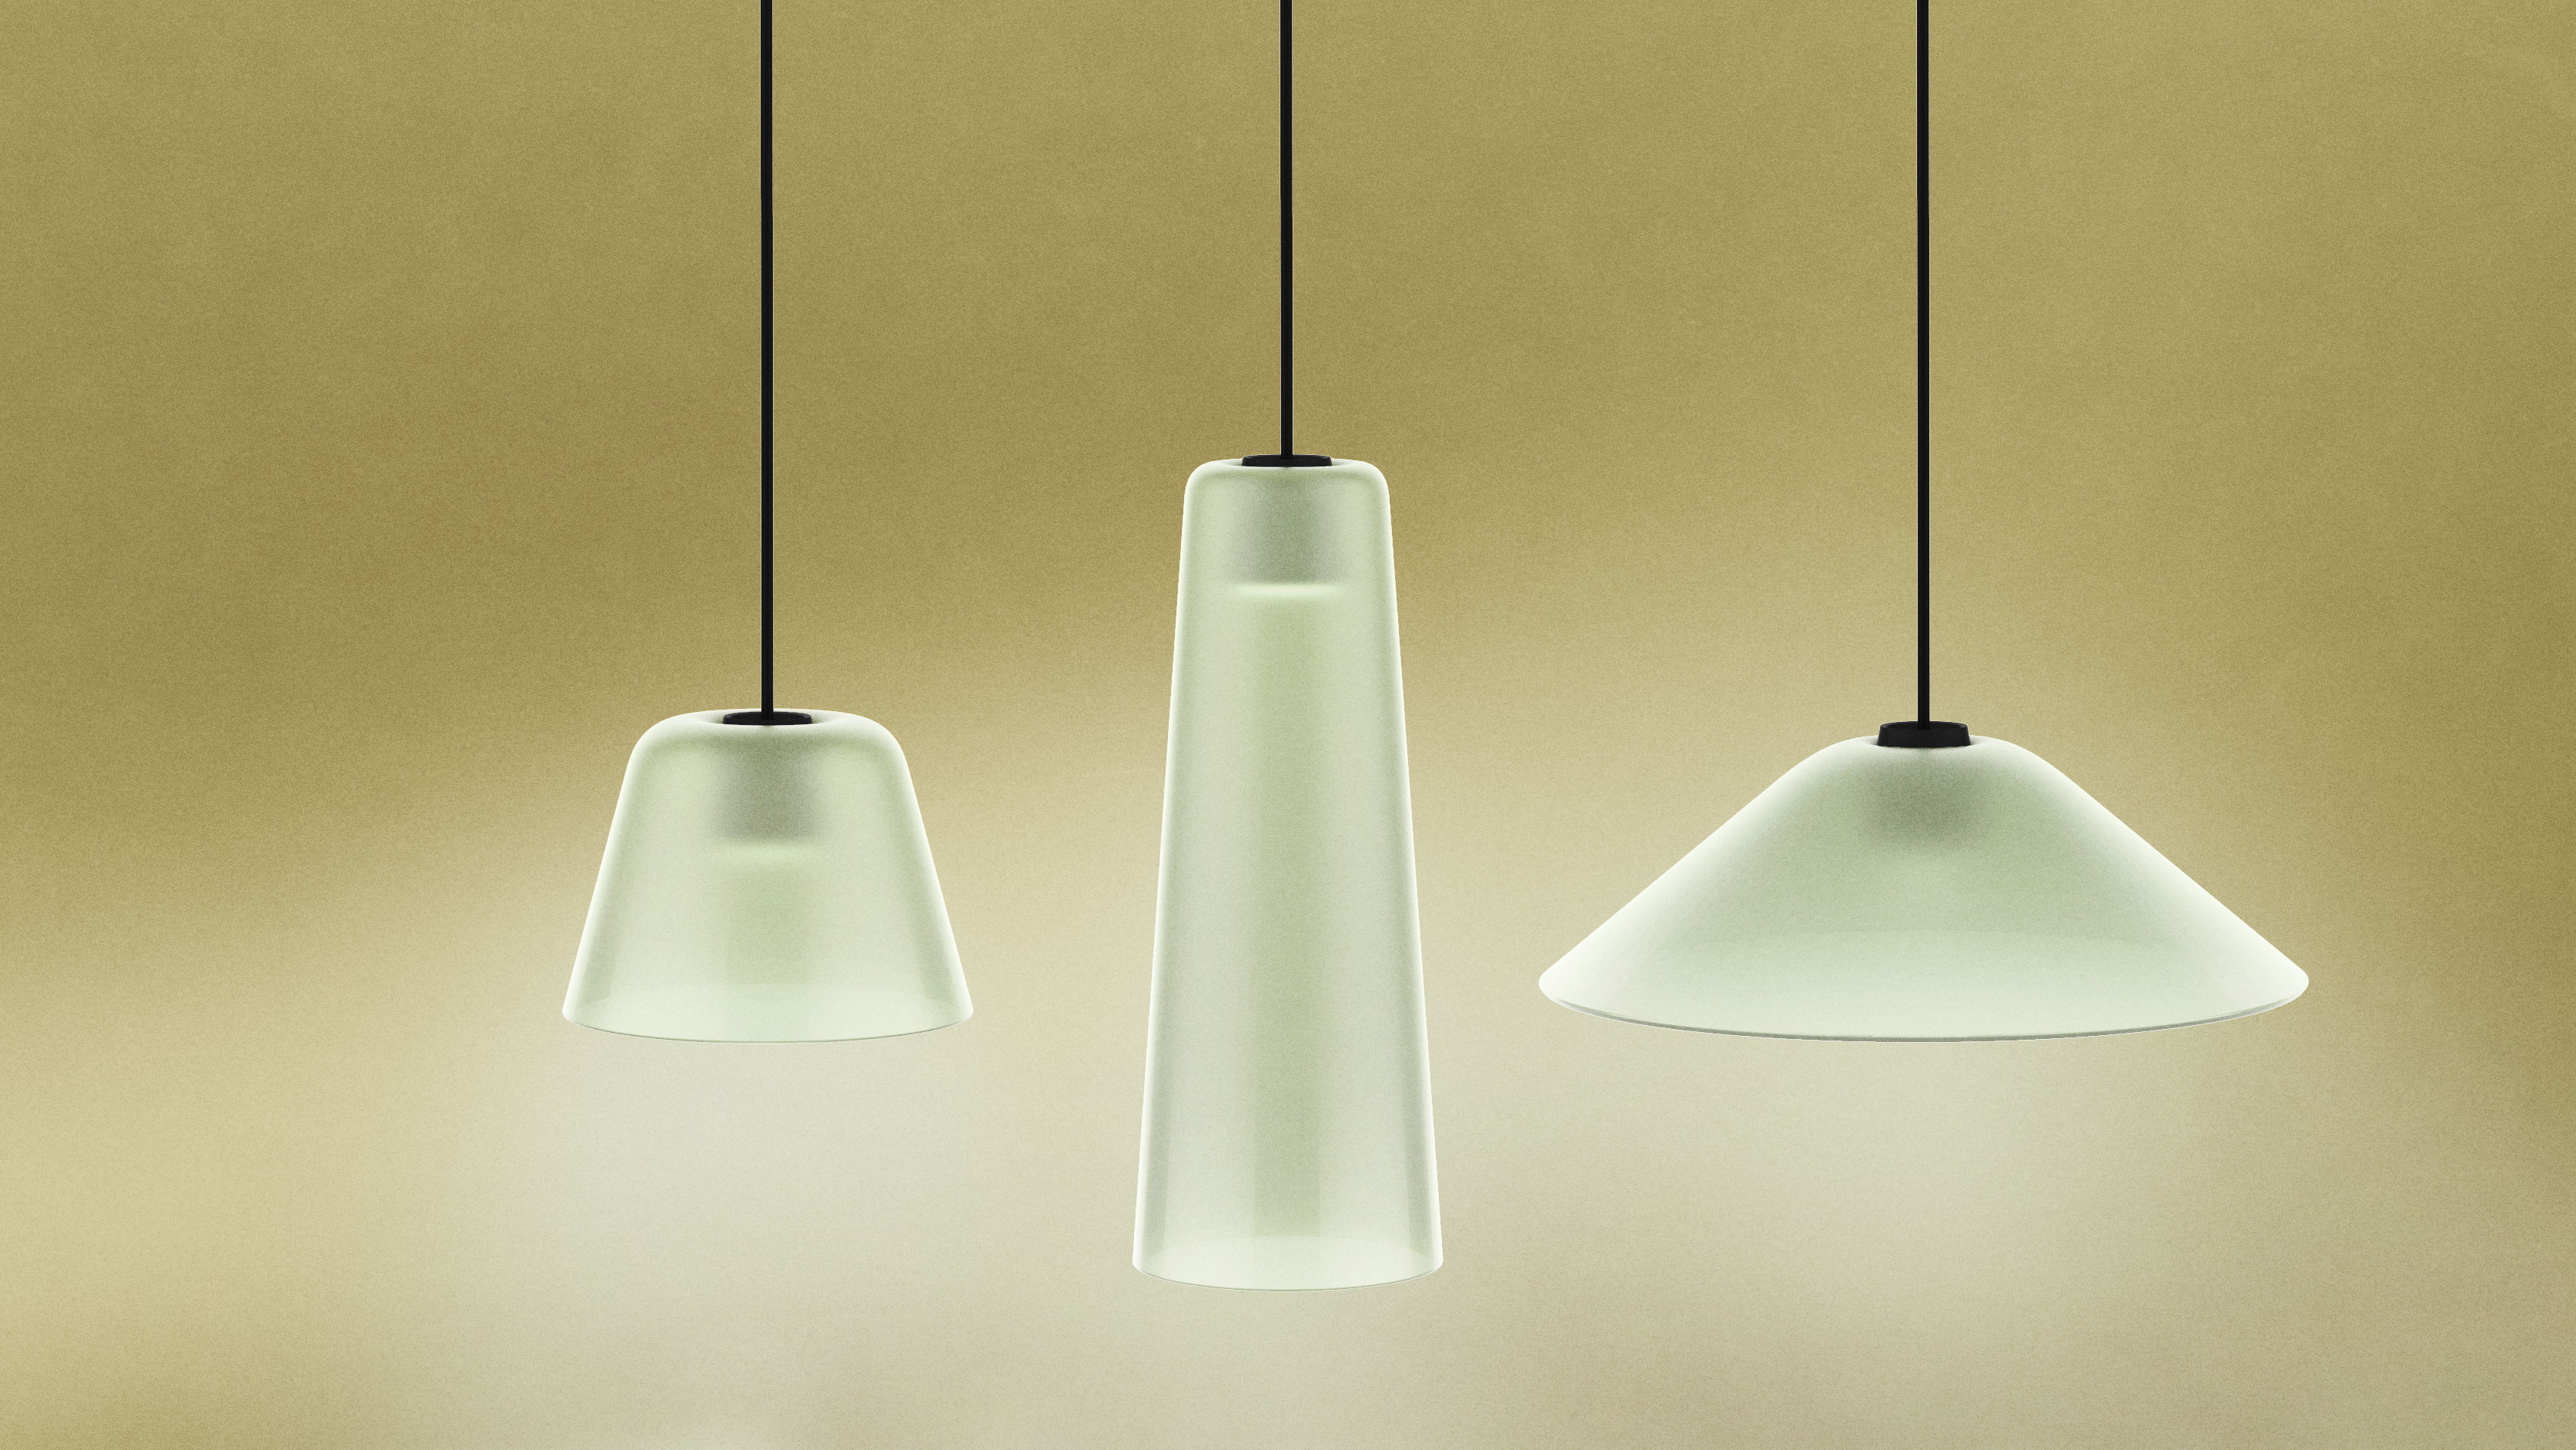 Typologie | Luminaire artisanal en série - Lamp trio